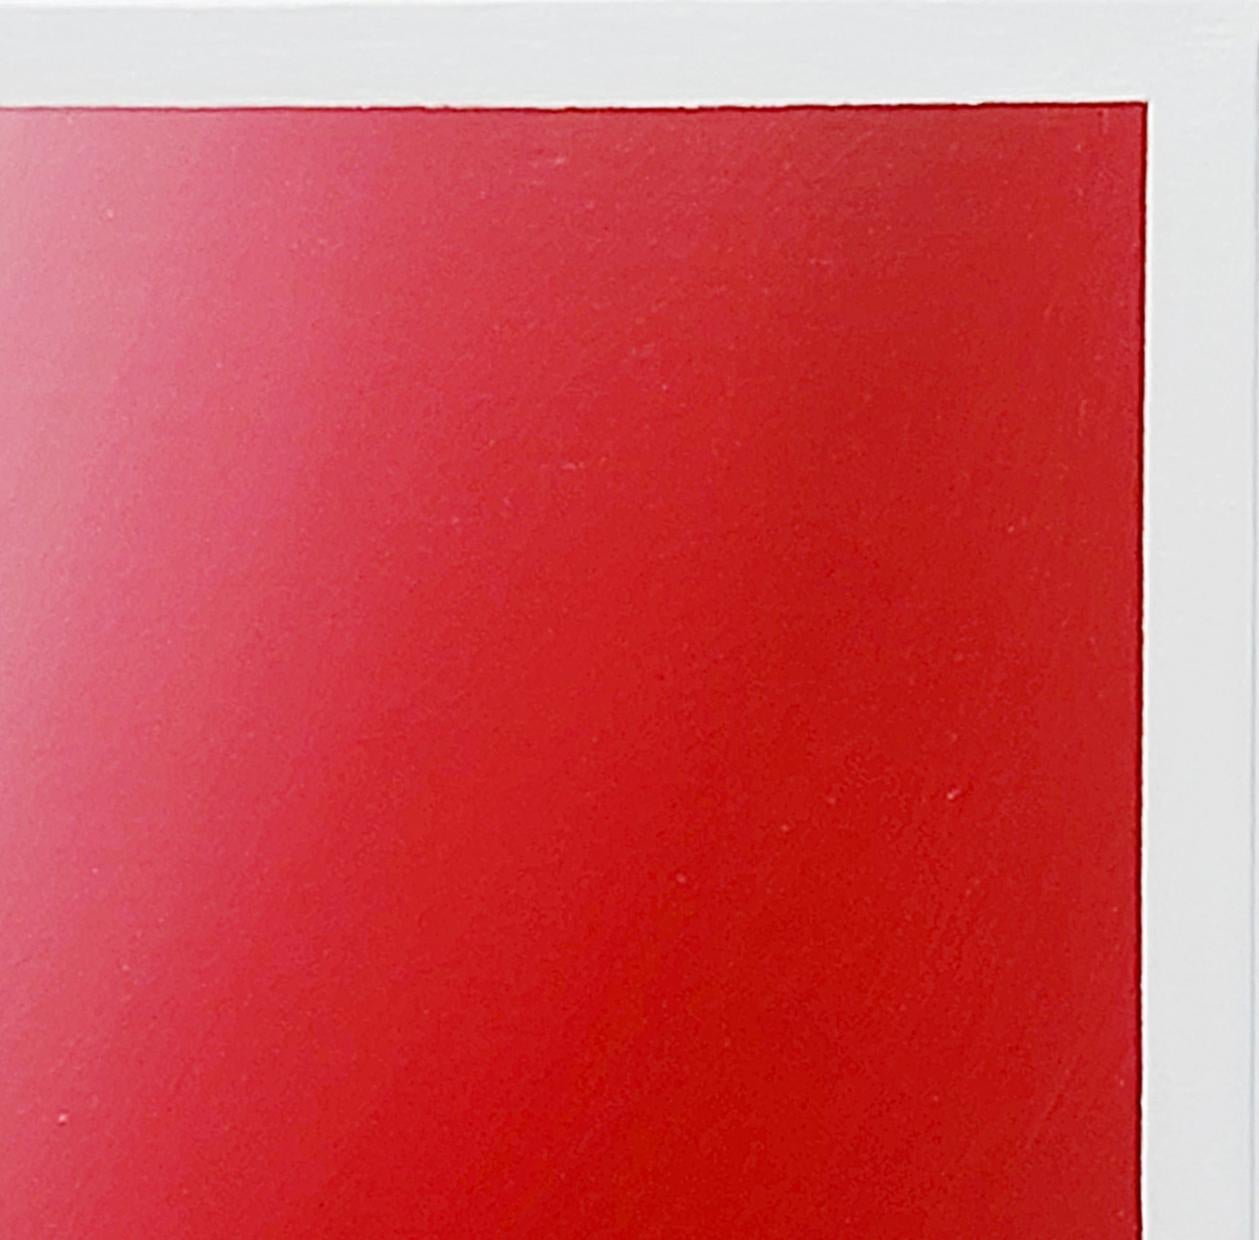 Herramienta en Rojo. From The Composition with Tools series - Painting by Jose Ricardo Contreras Gonzalez